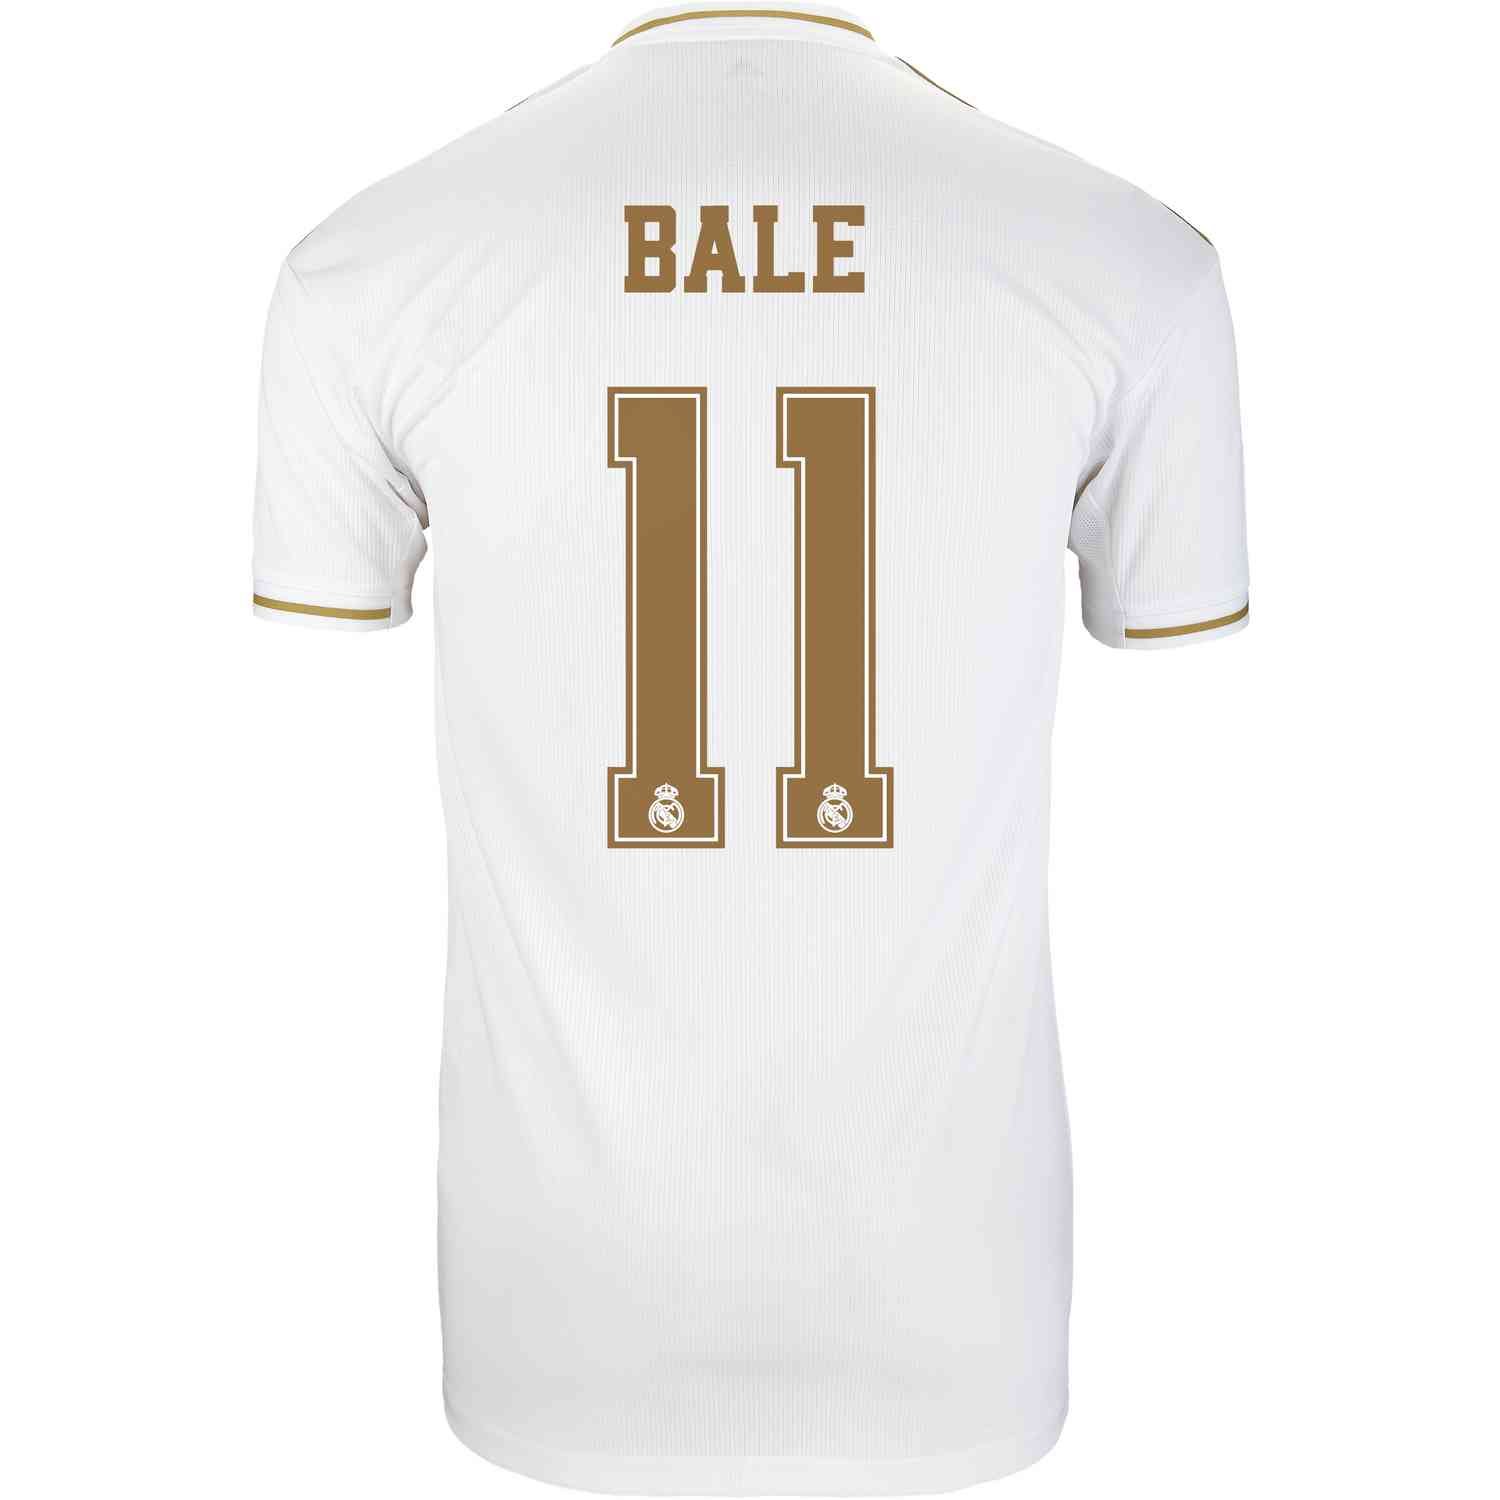 2019/20 adidas Gareth Bale Real Madrid 